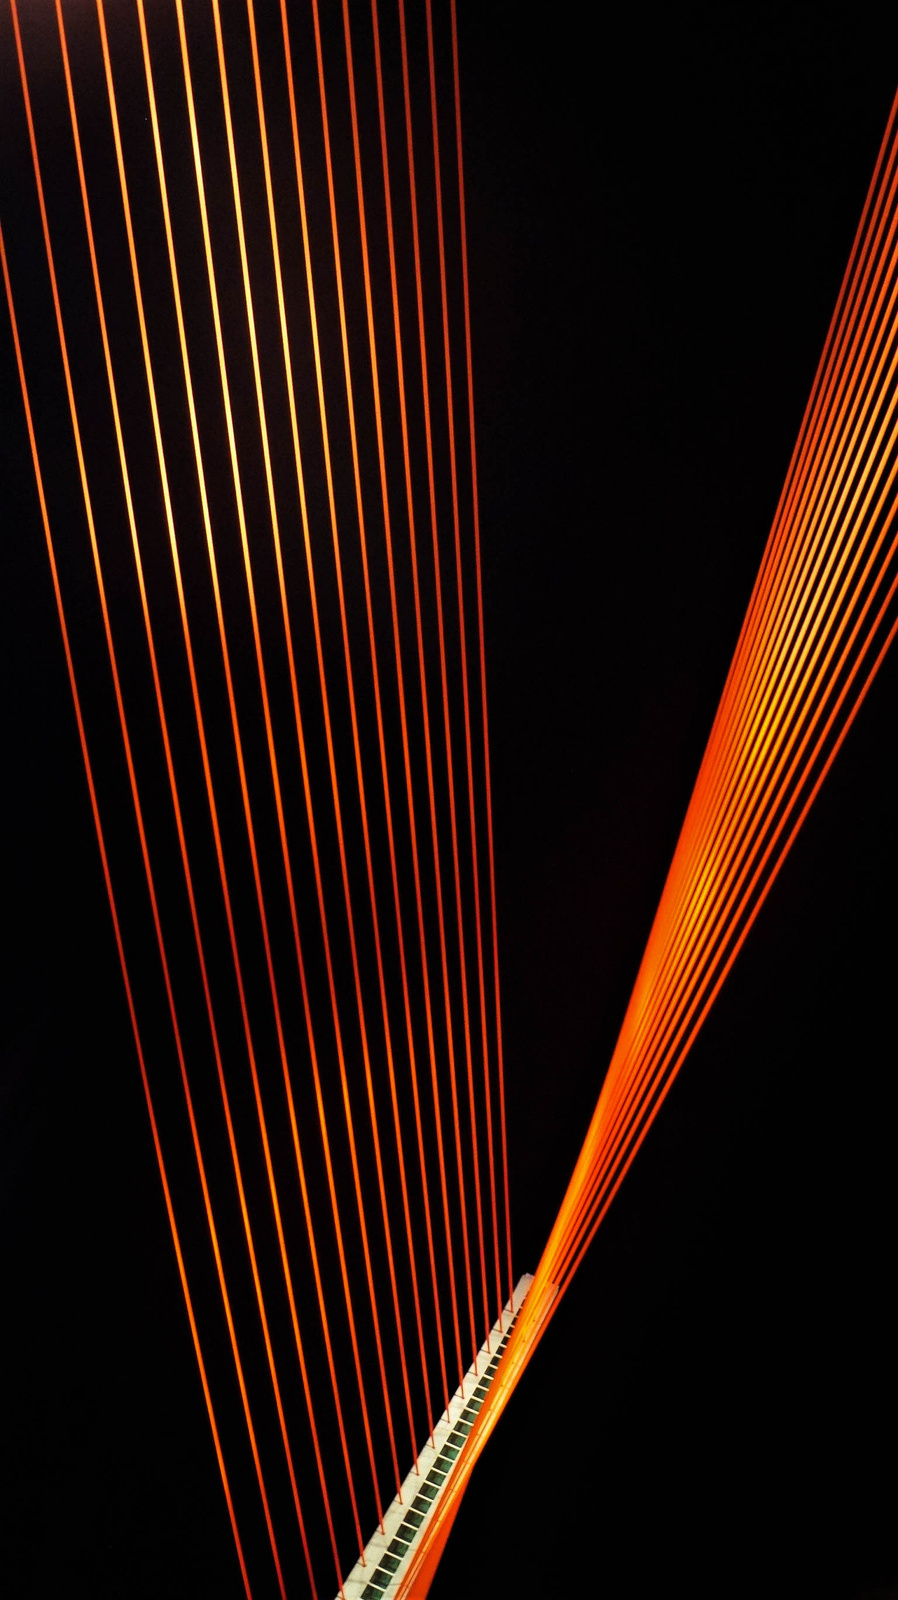 lightbridge in a different perspective/3 Digital 2018 Palágyi Ba